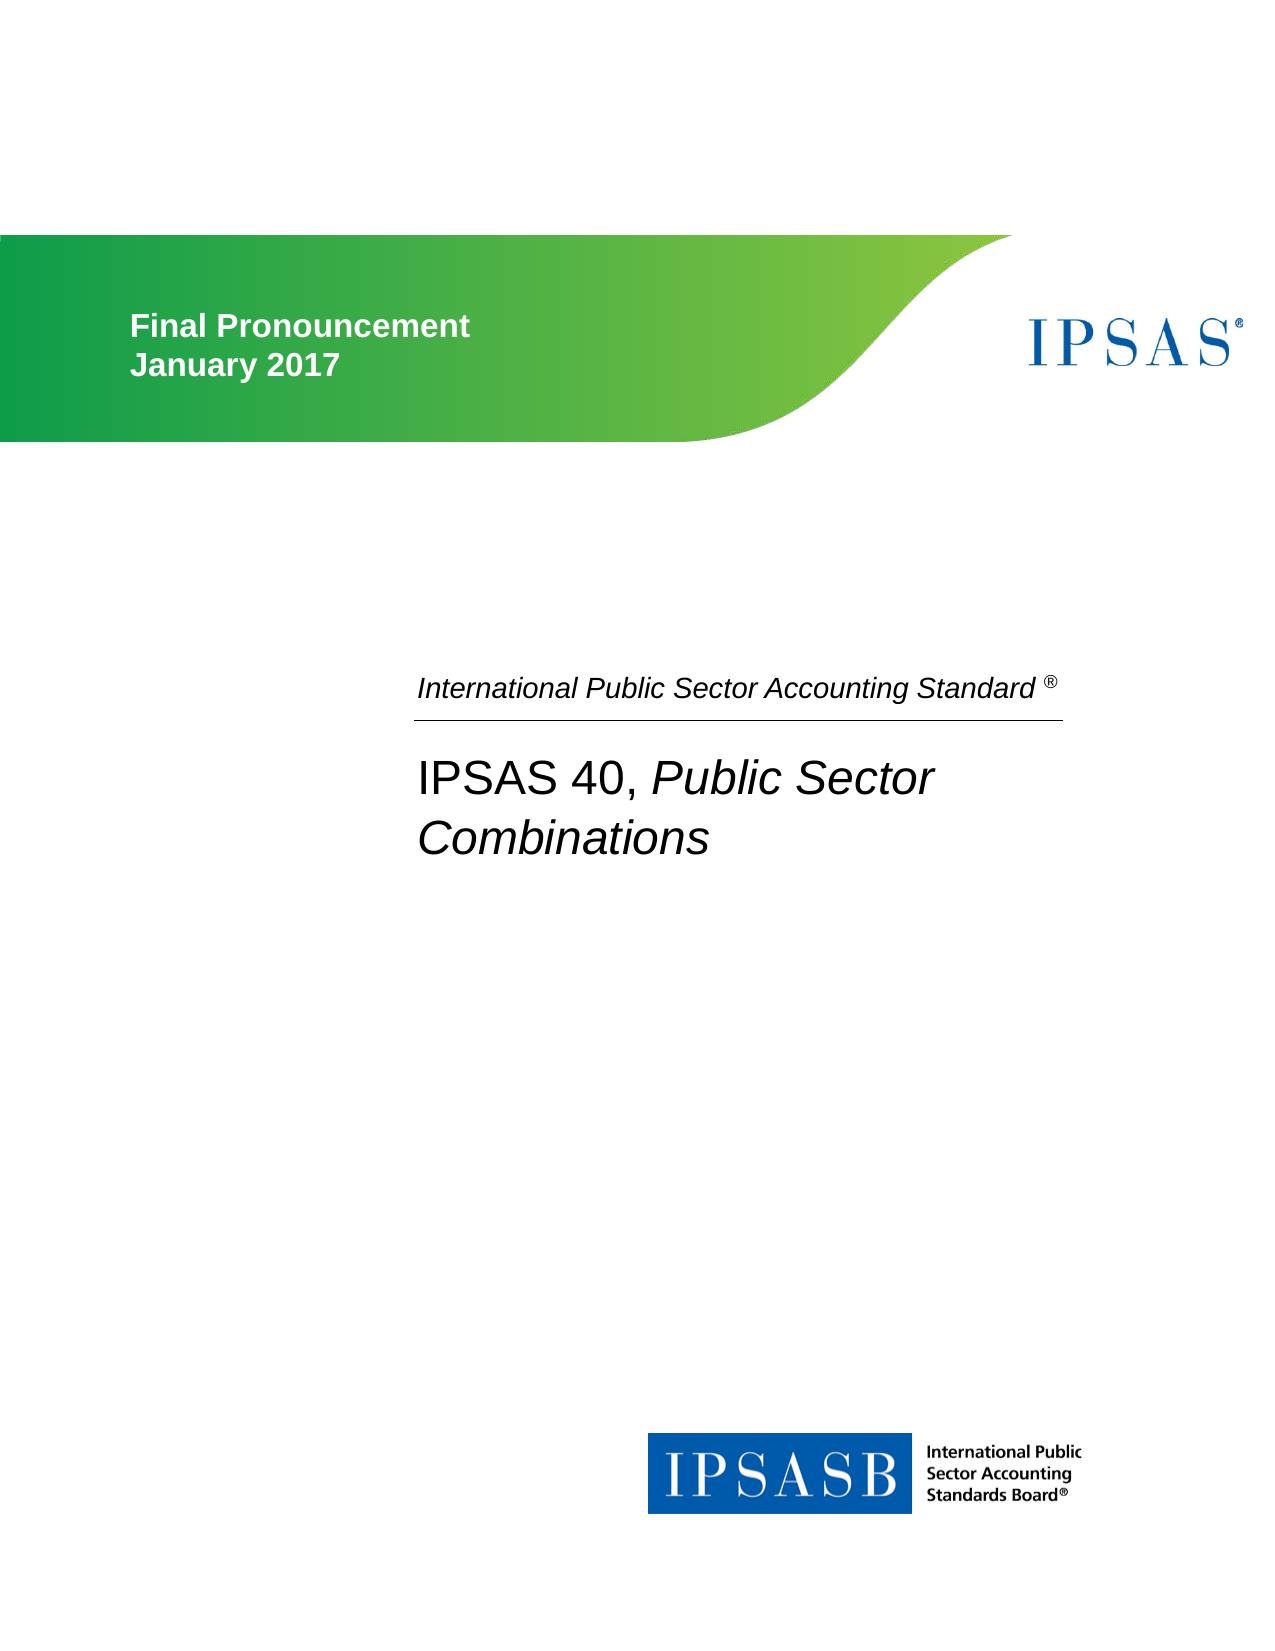 IPSAS 40 Public Sector Combinations 2017